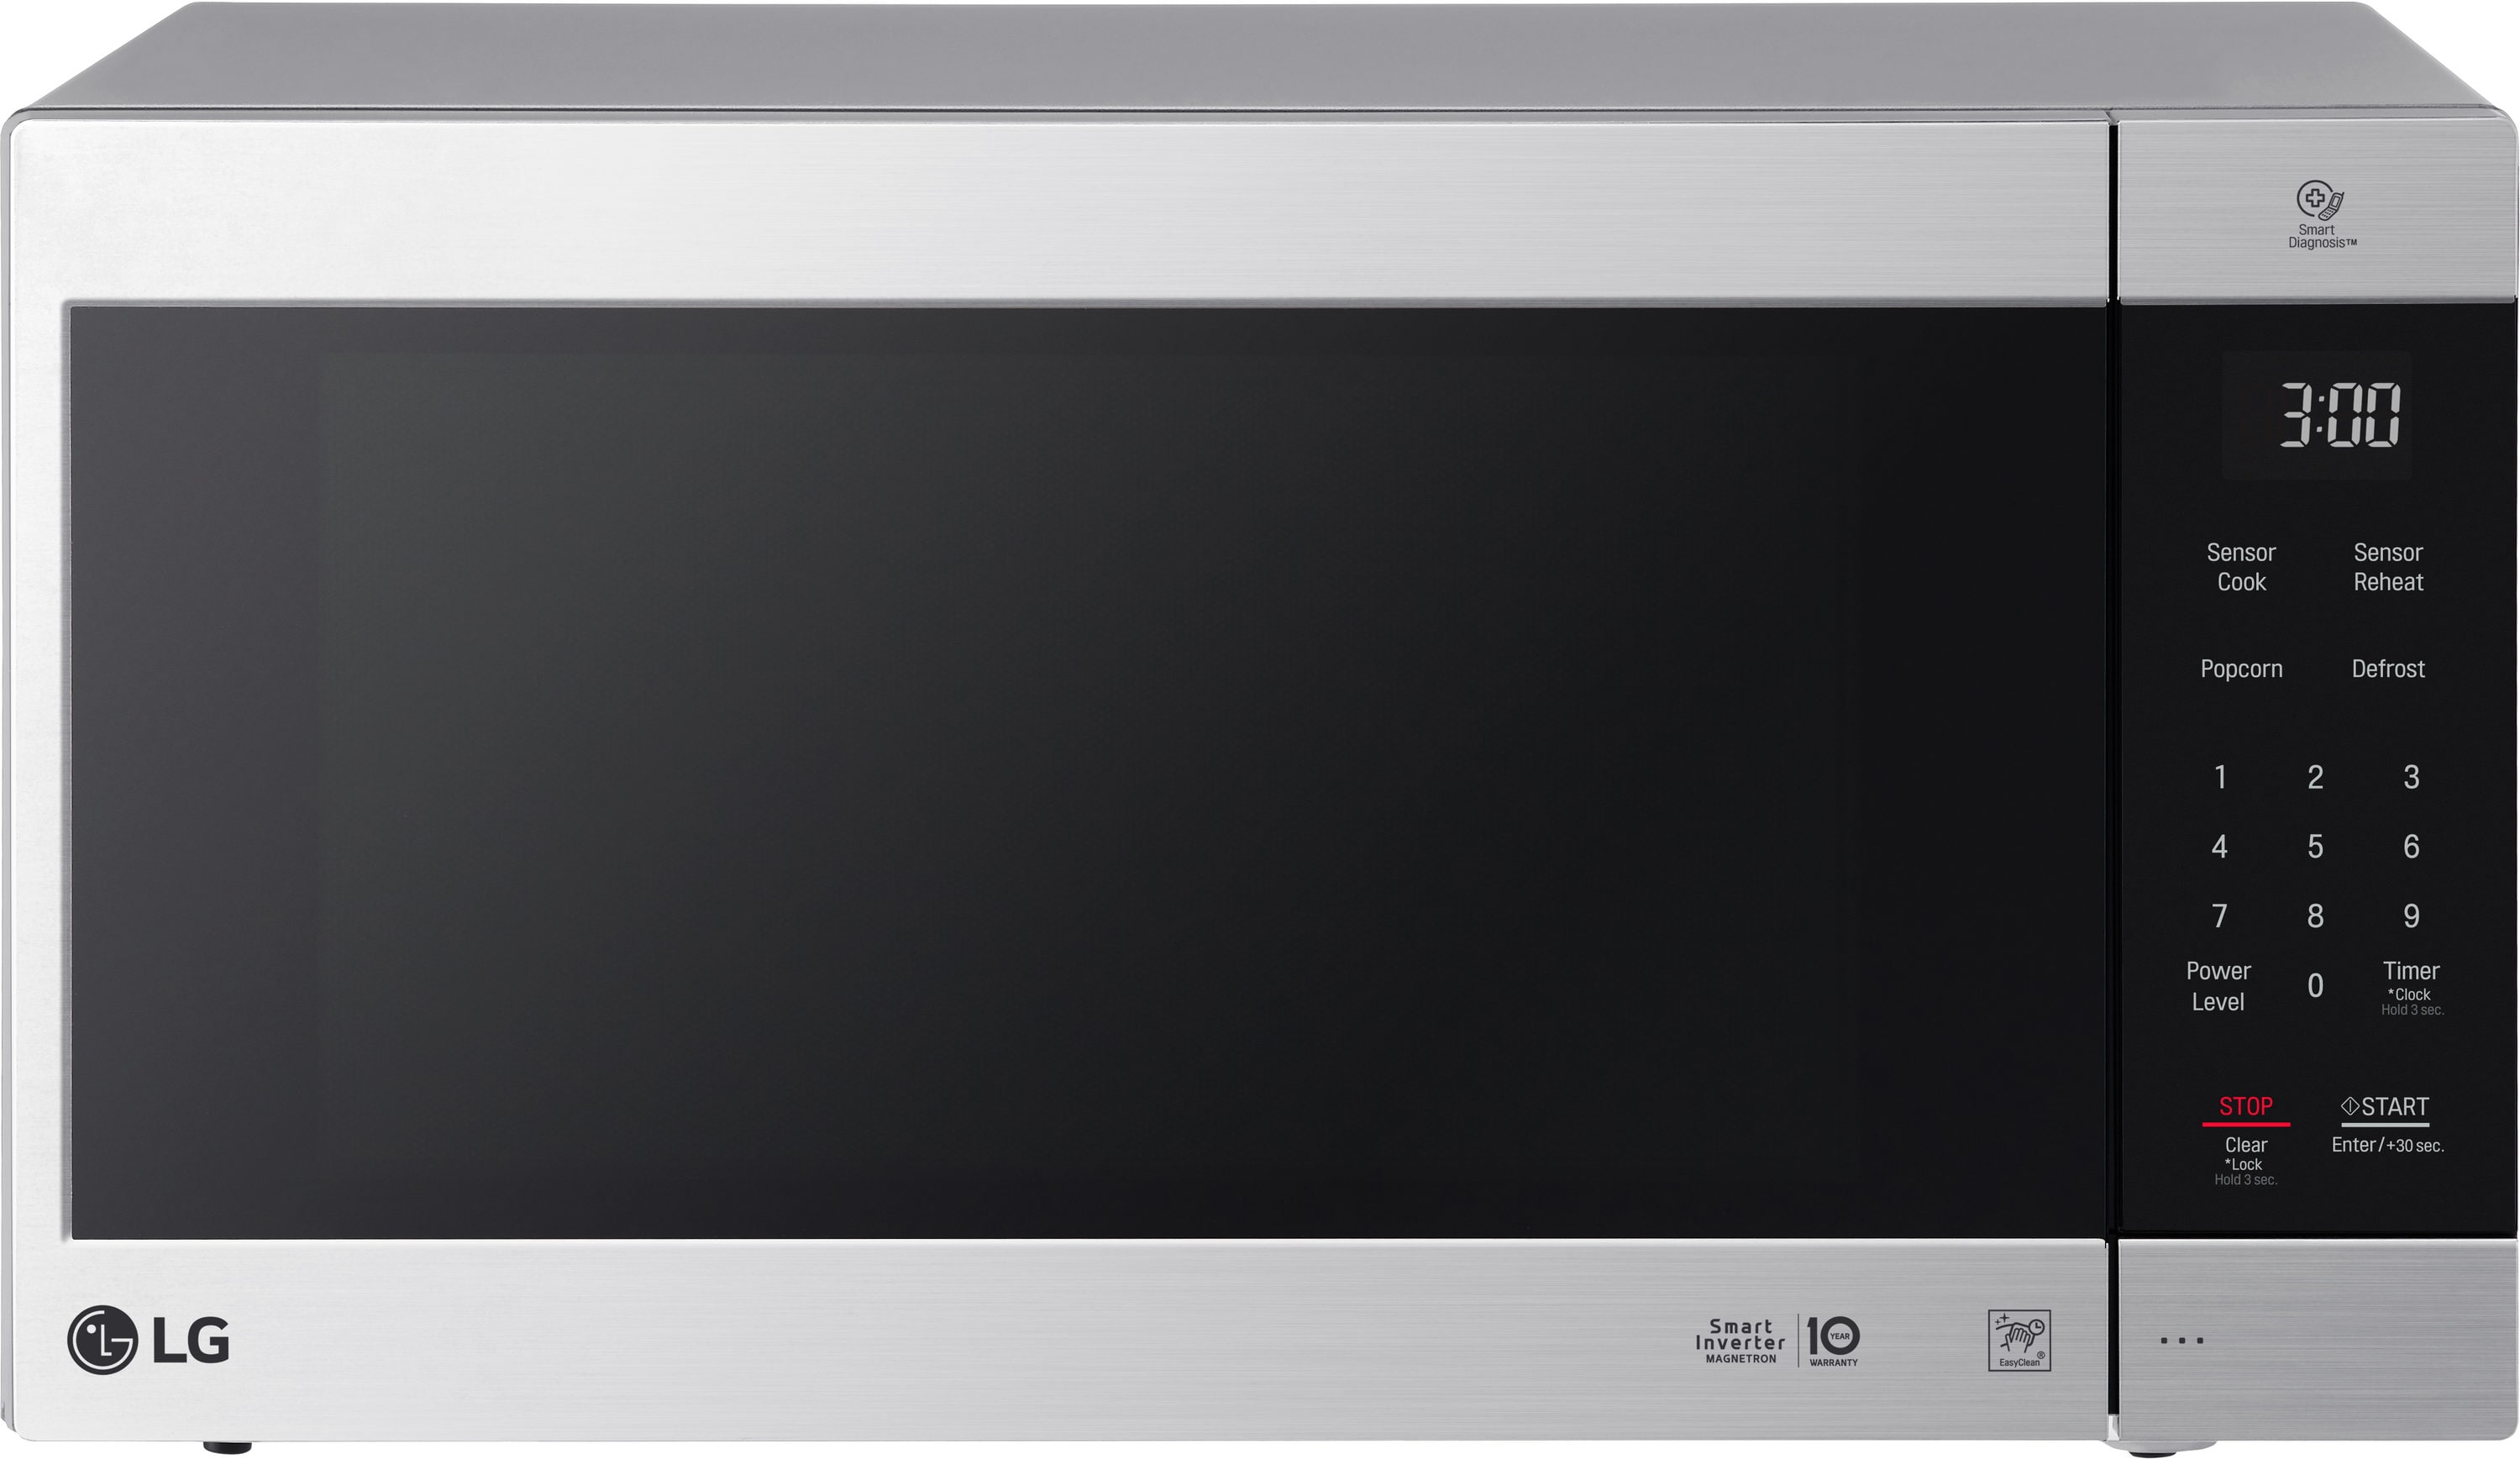 Farberware Professional 2.2 Cu. ft. 1200-Watt Microwave Oven with Smart Sensor Cooking, Stainless Steel